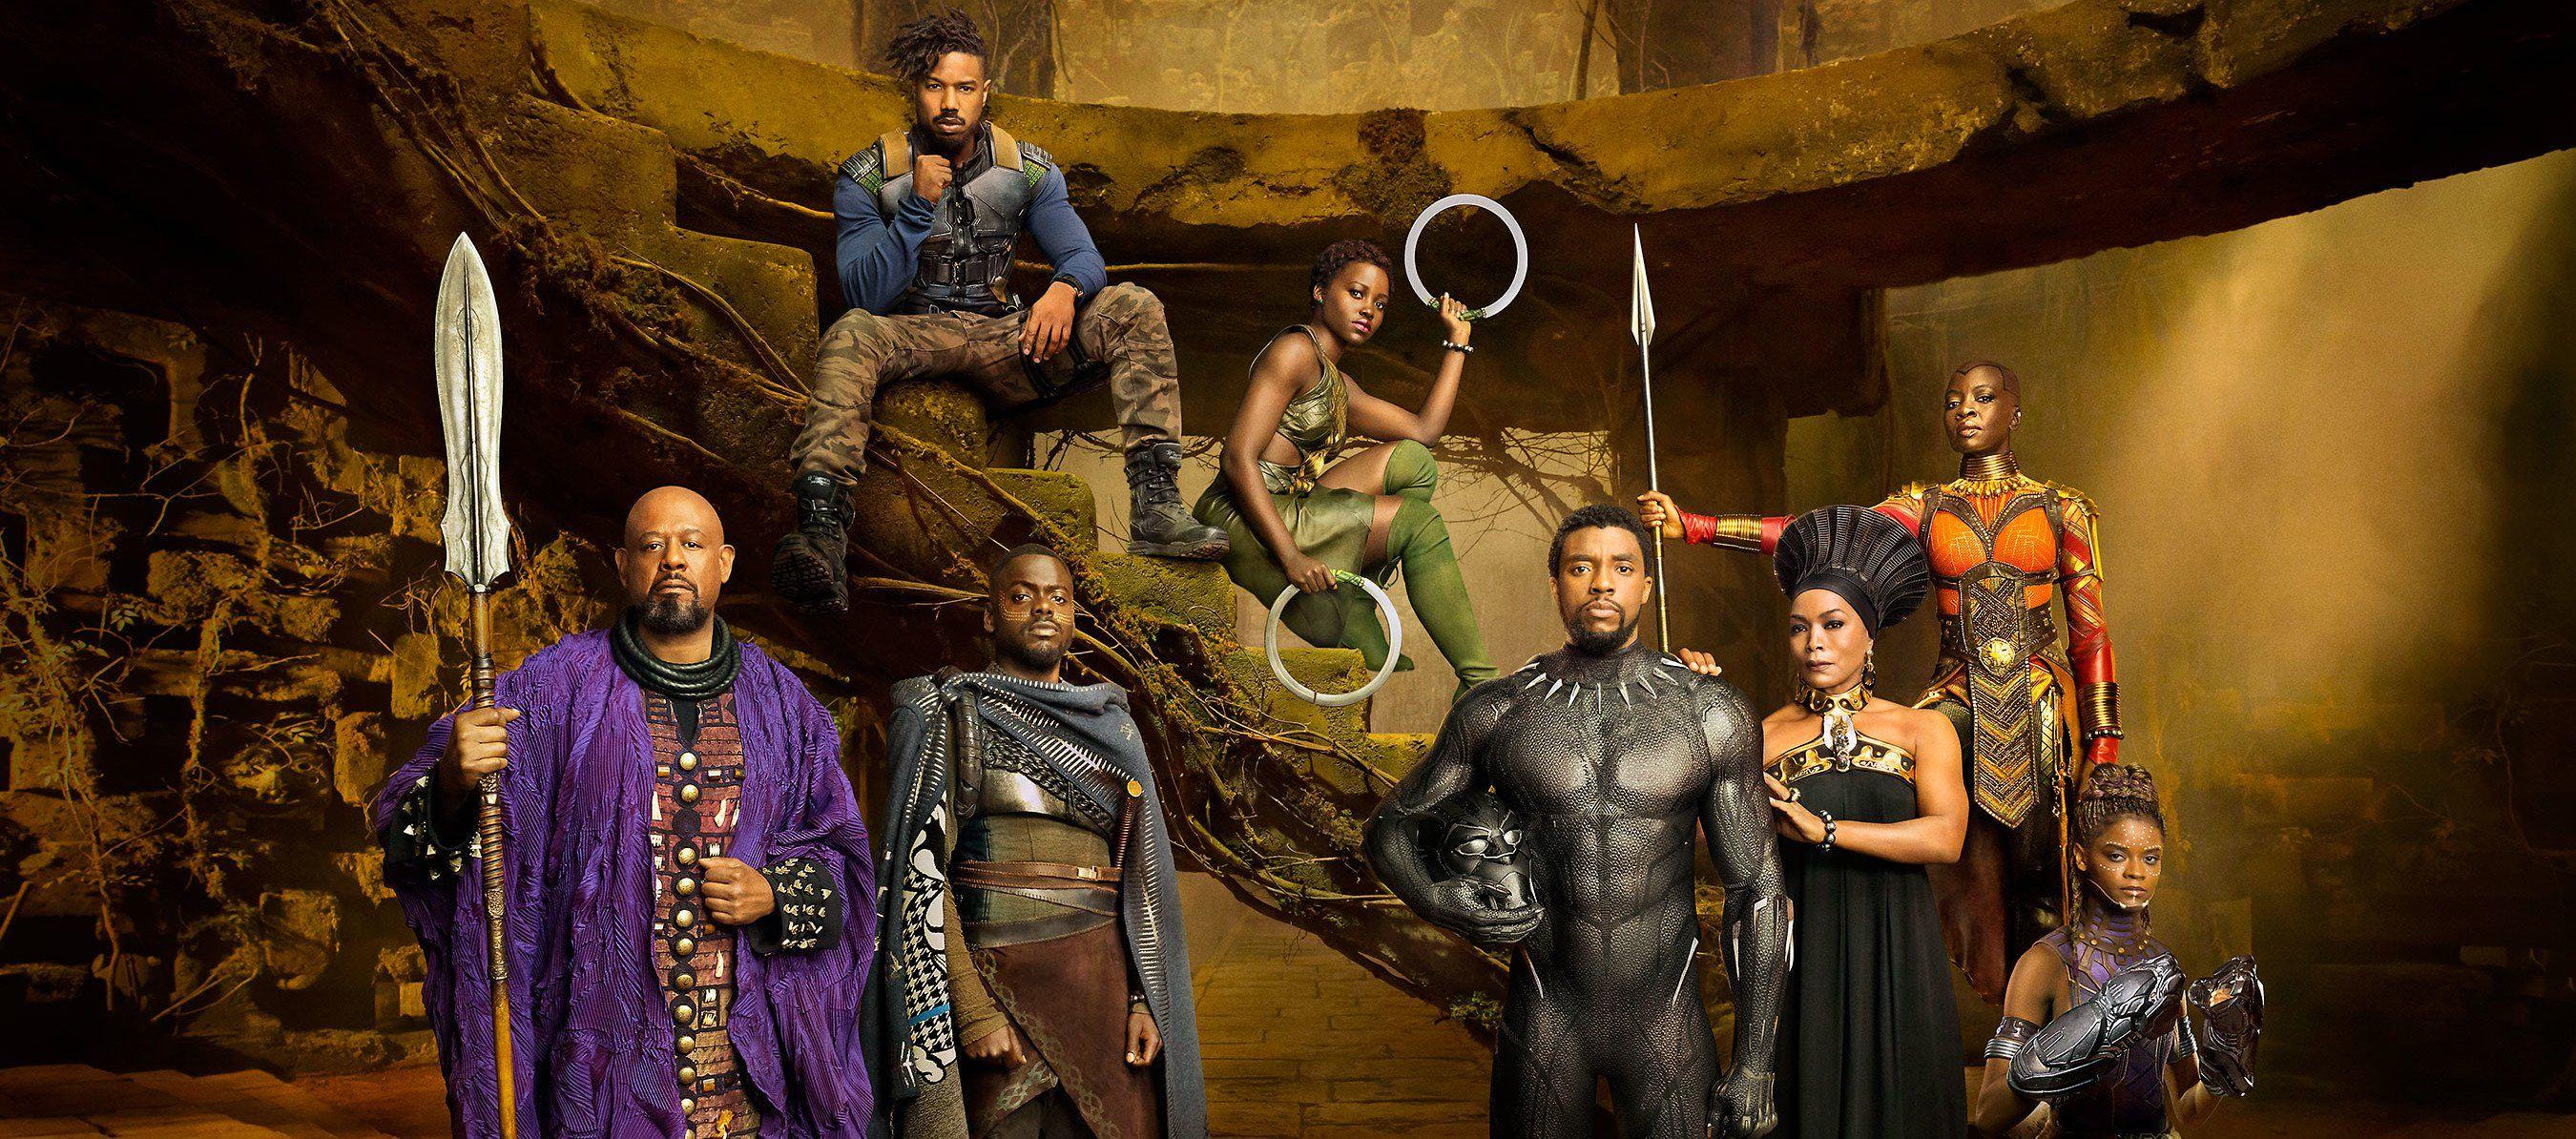 New Black Panther Photo Give a Majestic Peek into A Secret Society